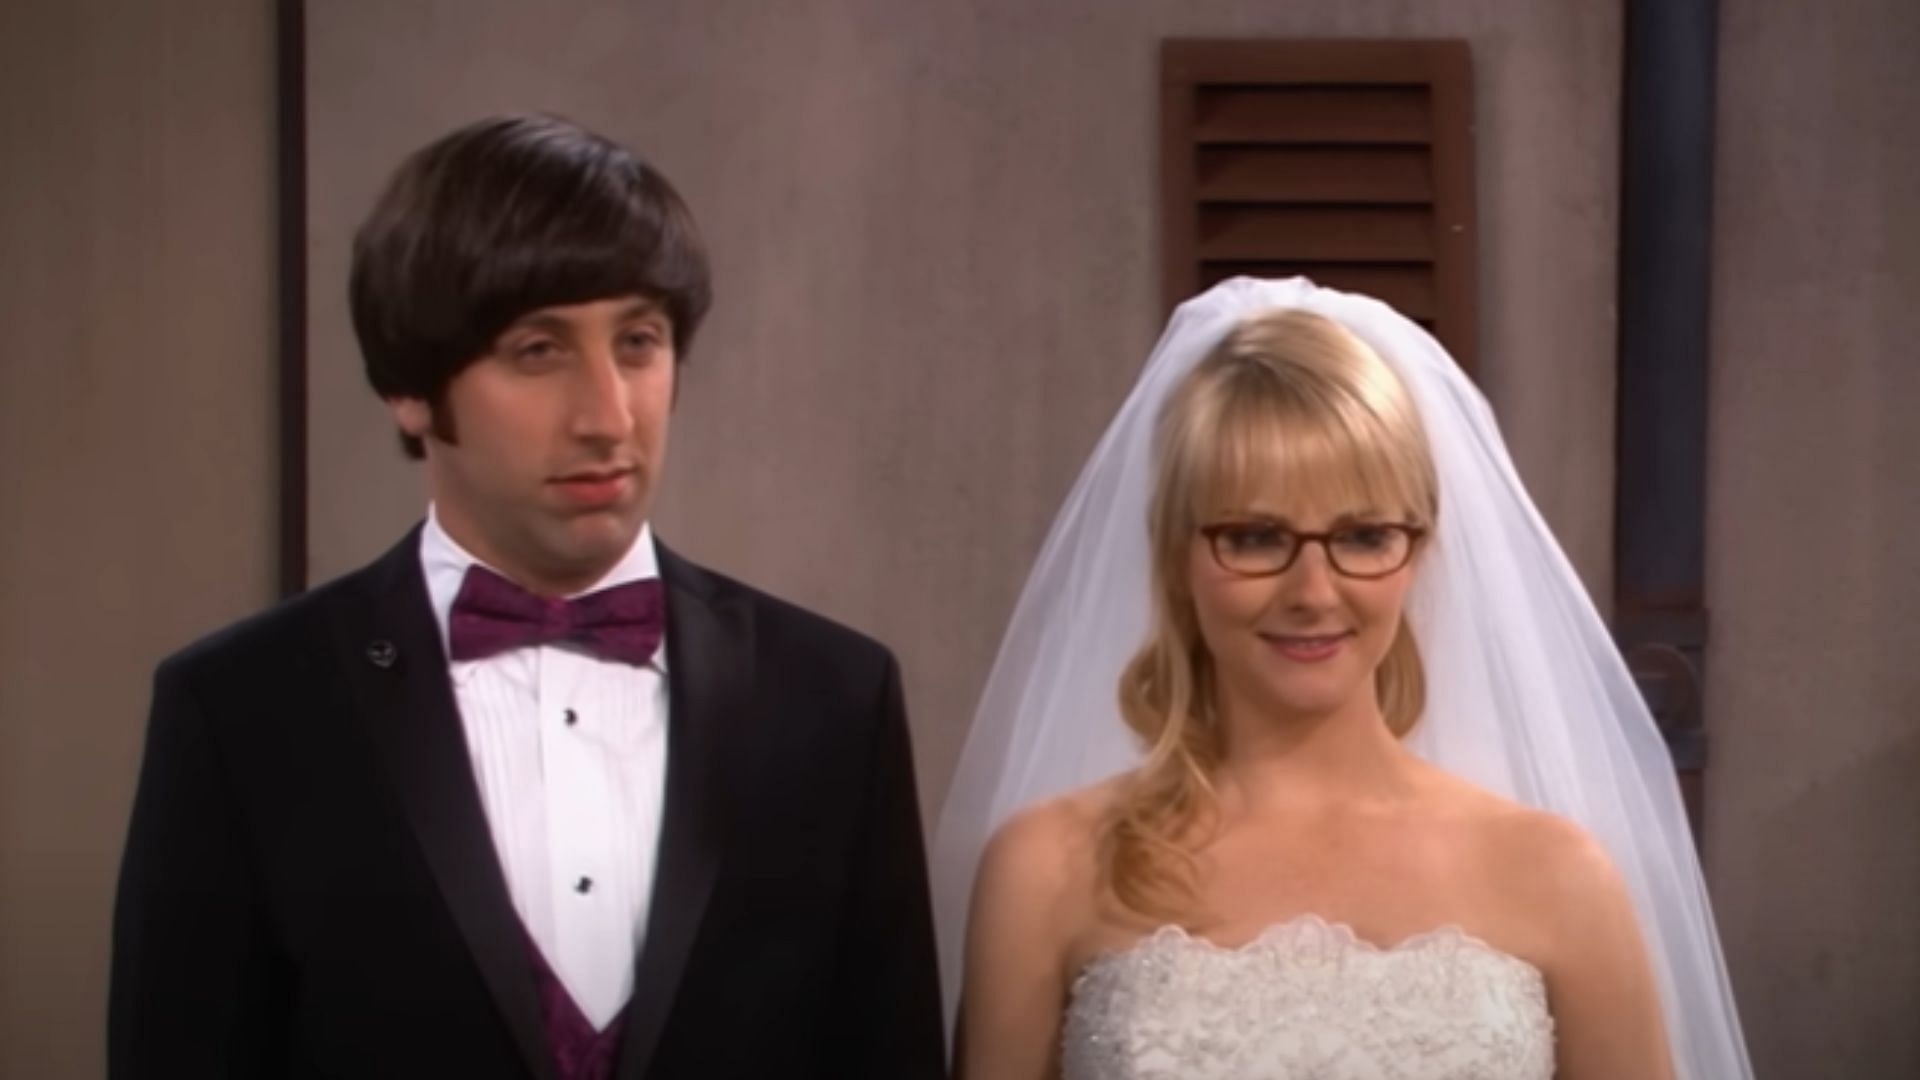 Howard and Bernadette Get Married (Image via TBS)